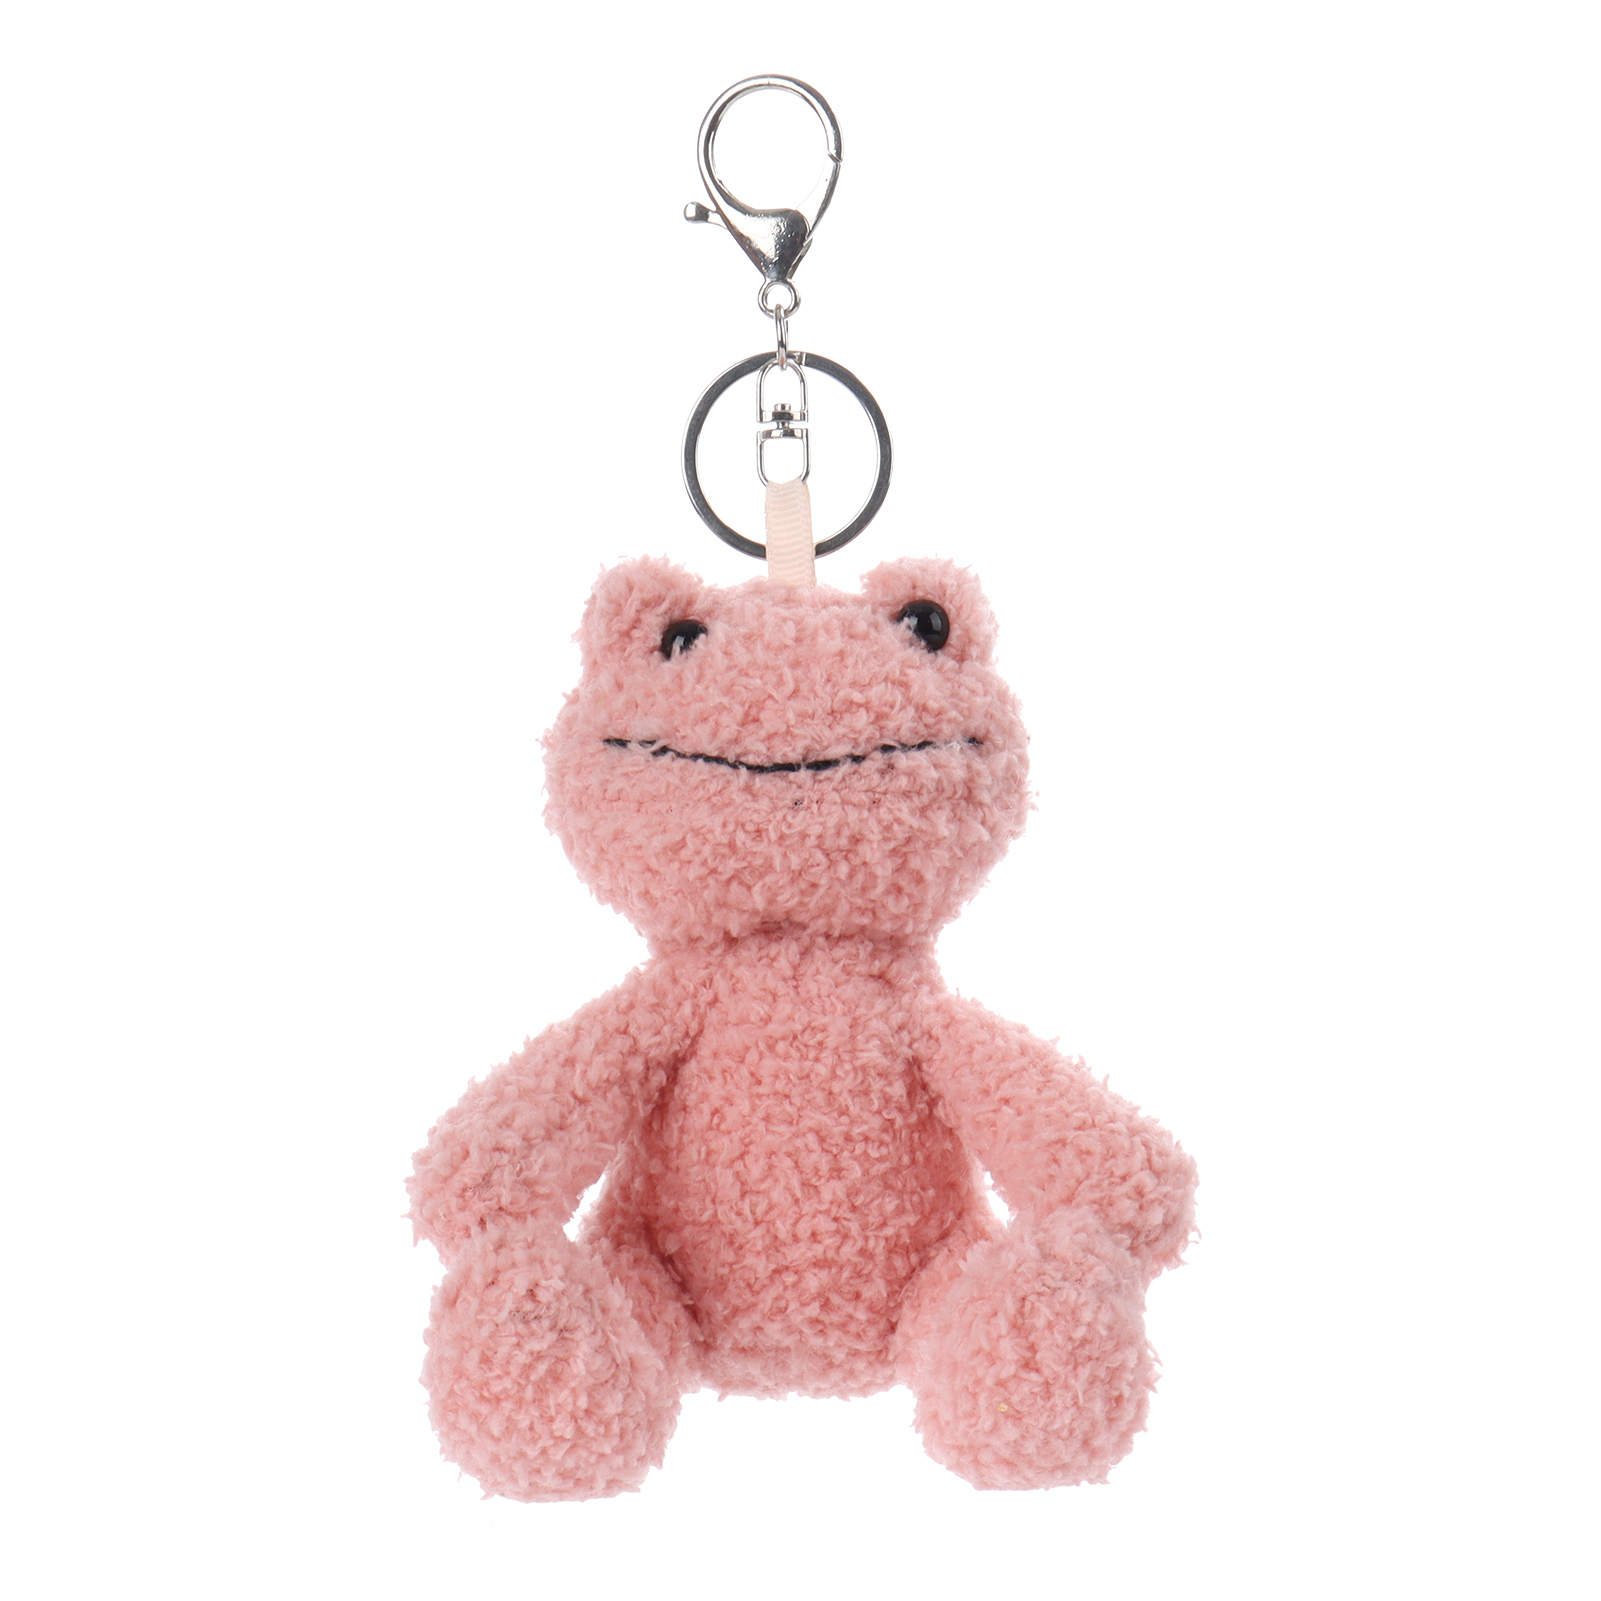 Apricot Lamb Velvet Frog Keychain-Pink Stuffed Animal Soft Plush Keychain